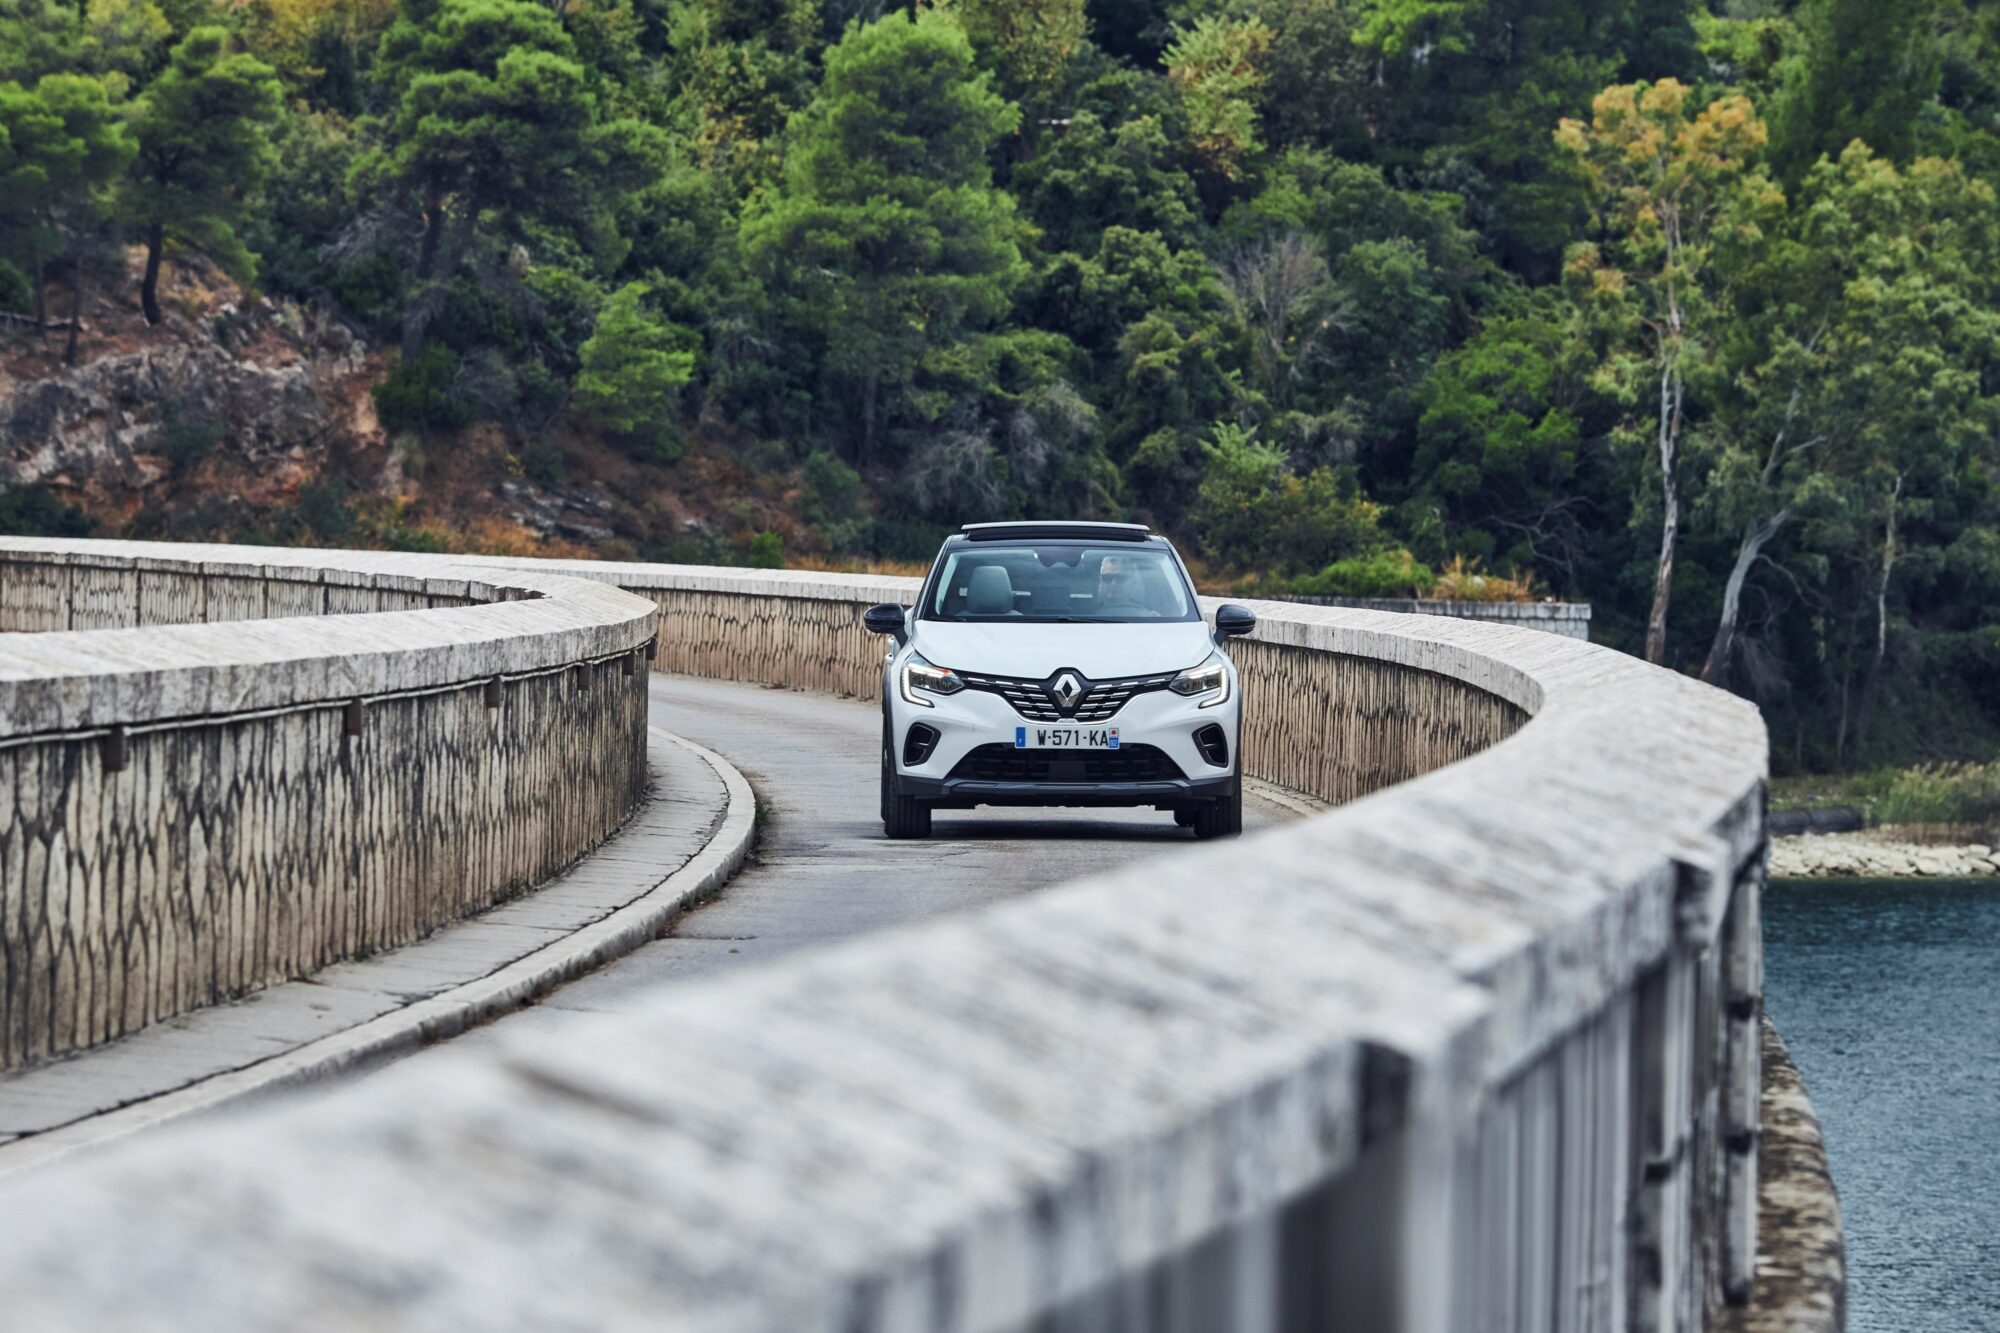 2019 - New Renault CAPTUR tests drive in Greece